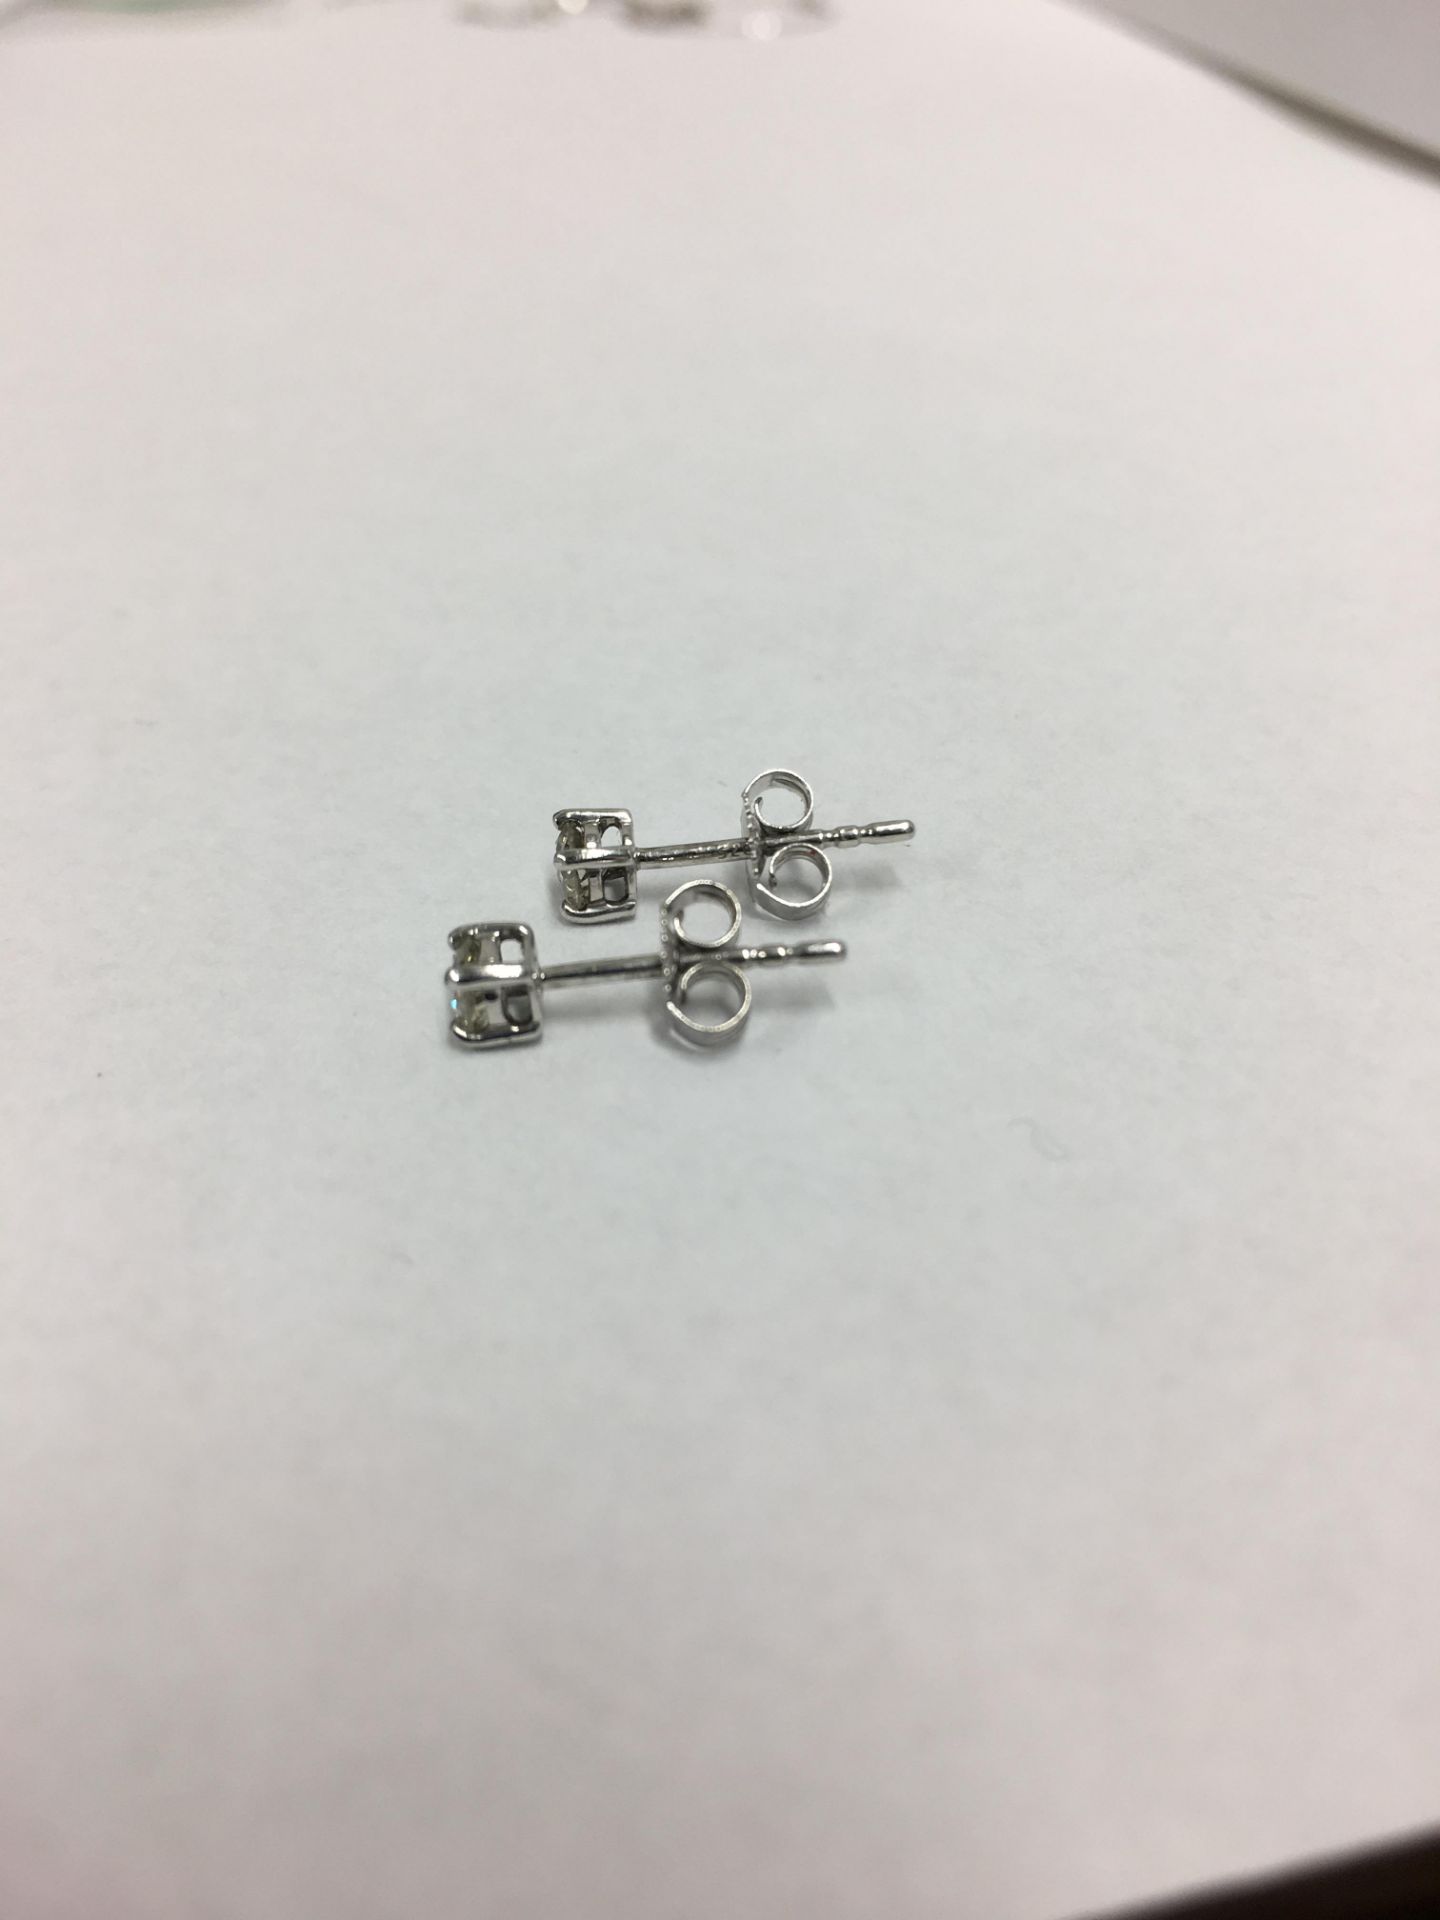 0.50Ct Diamond Solitaire Stud Earrings Set In Platinum. - Image 2 of 3